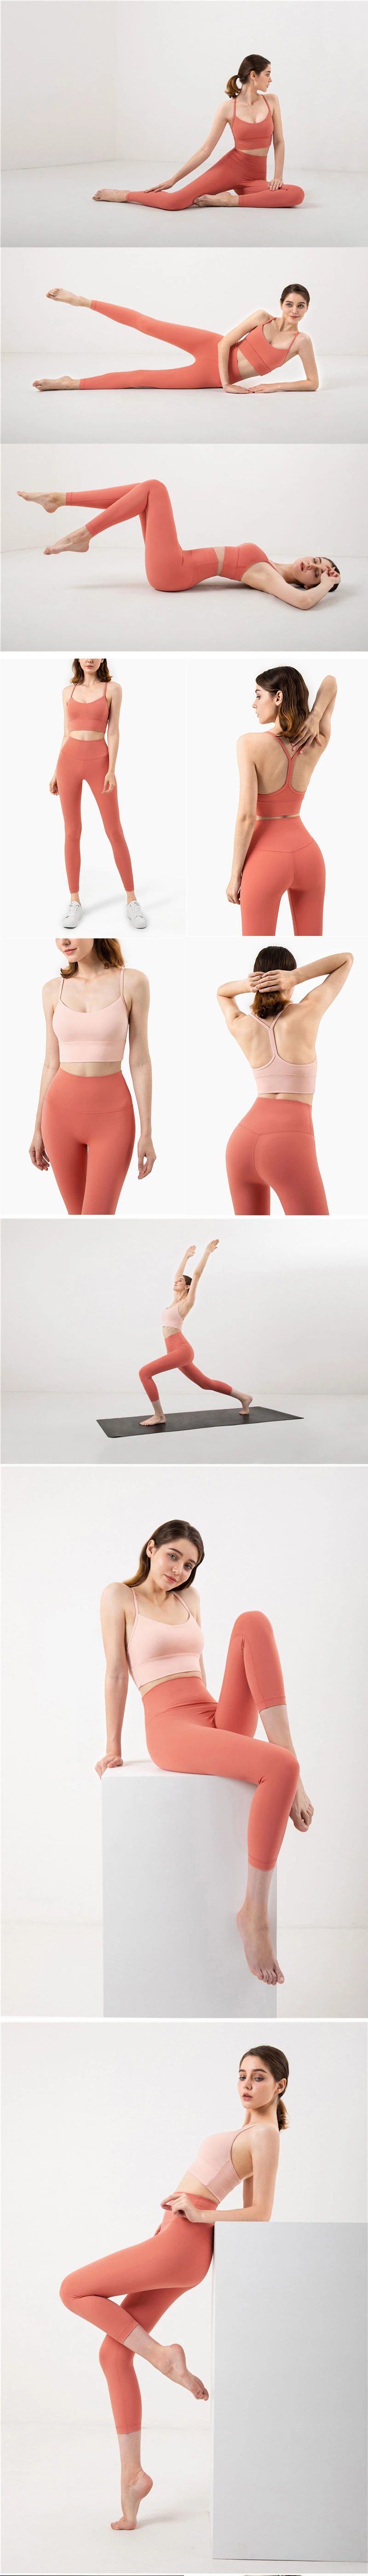 Beauty Back Sports Bra Mesh Quick-Drying Shockproof Yoga Wear Running Fitness Sports Underwear